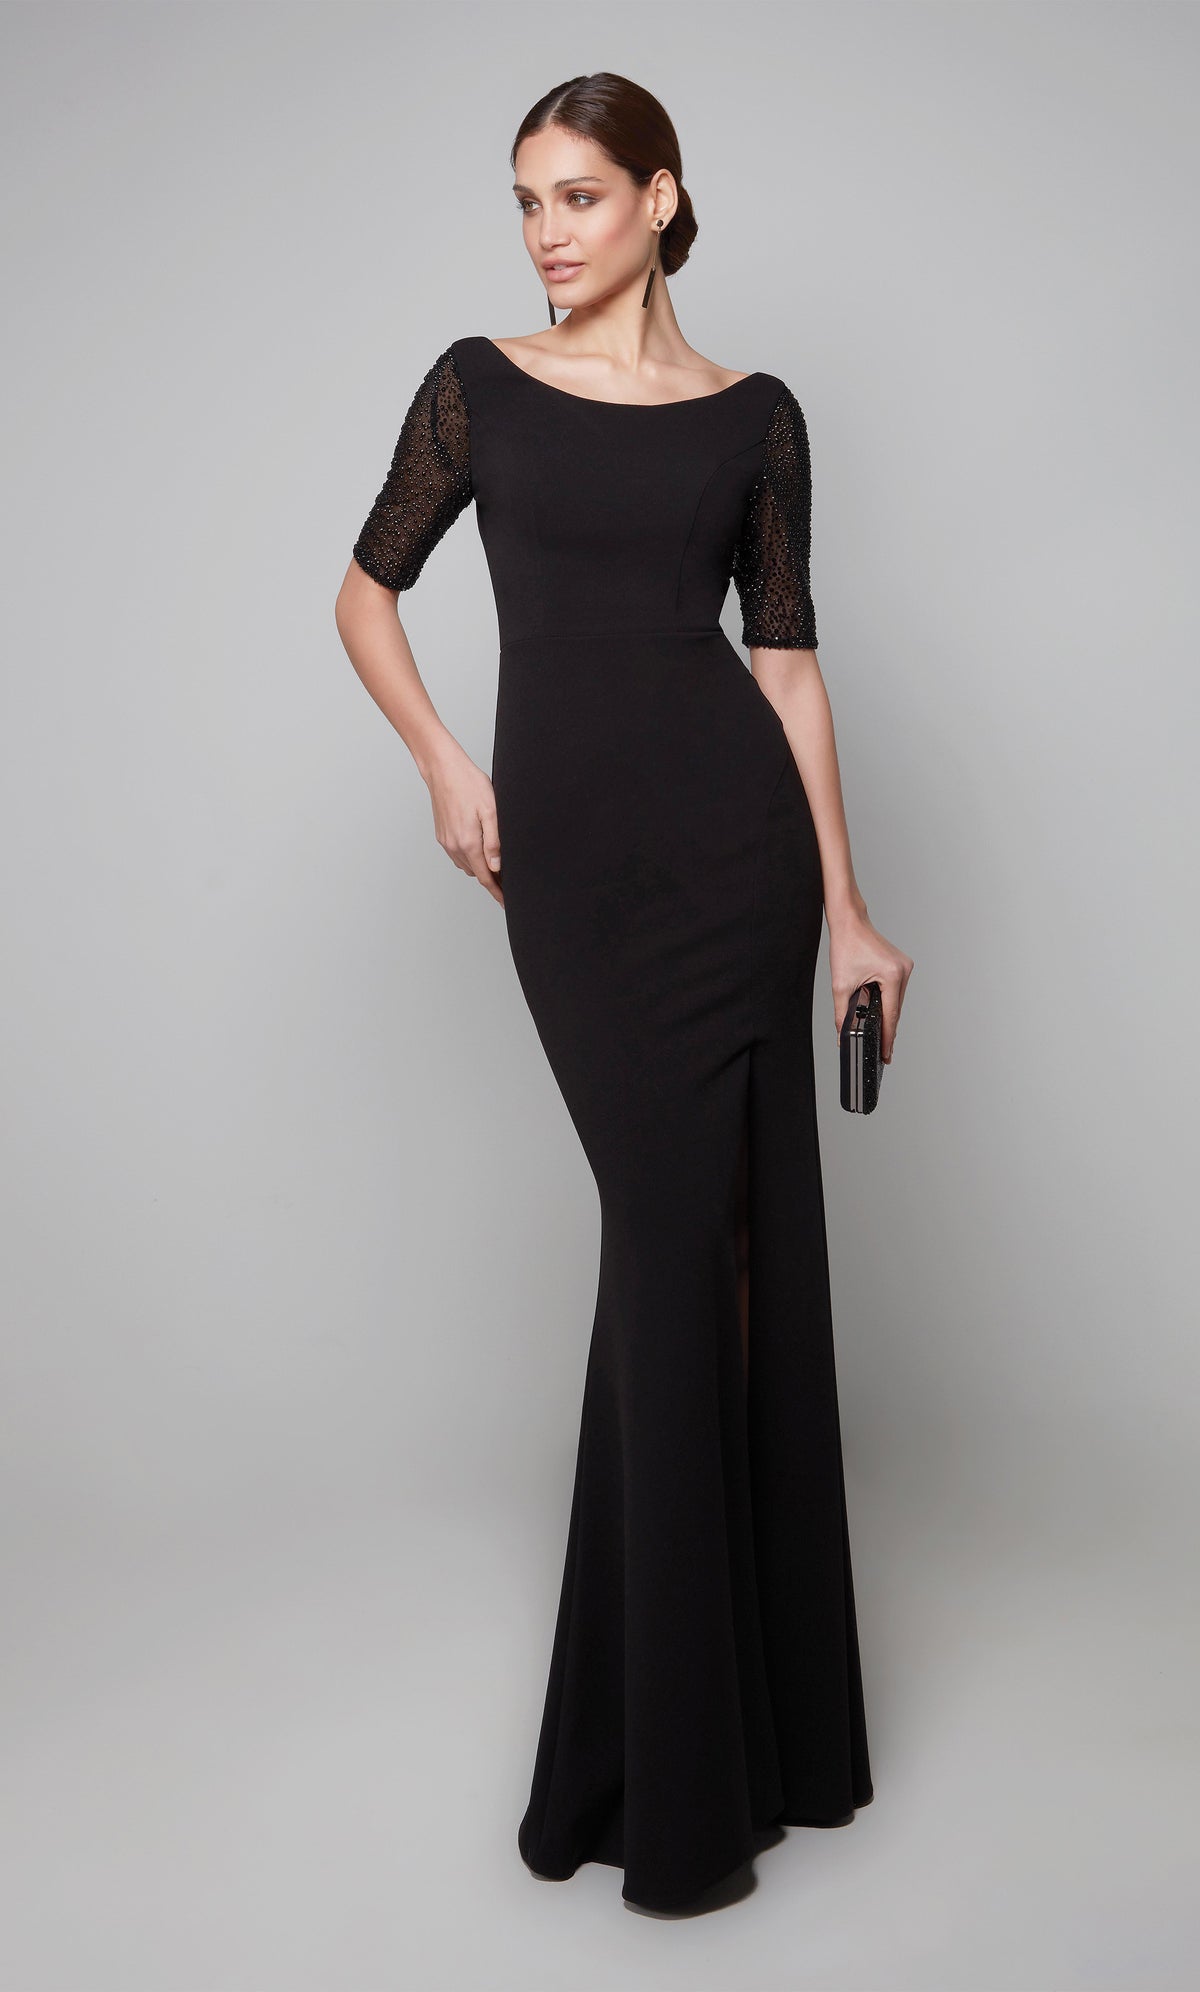 Chic black formal dress with a scoop neck, embellished sleeves, and side slit. Color-SWATCH_27628__BLACK